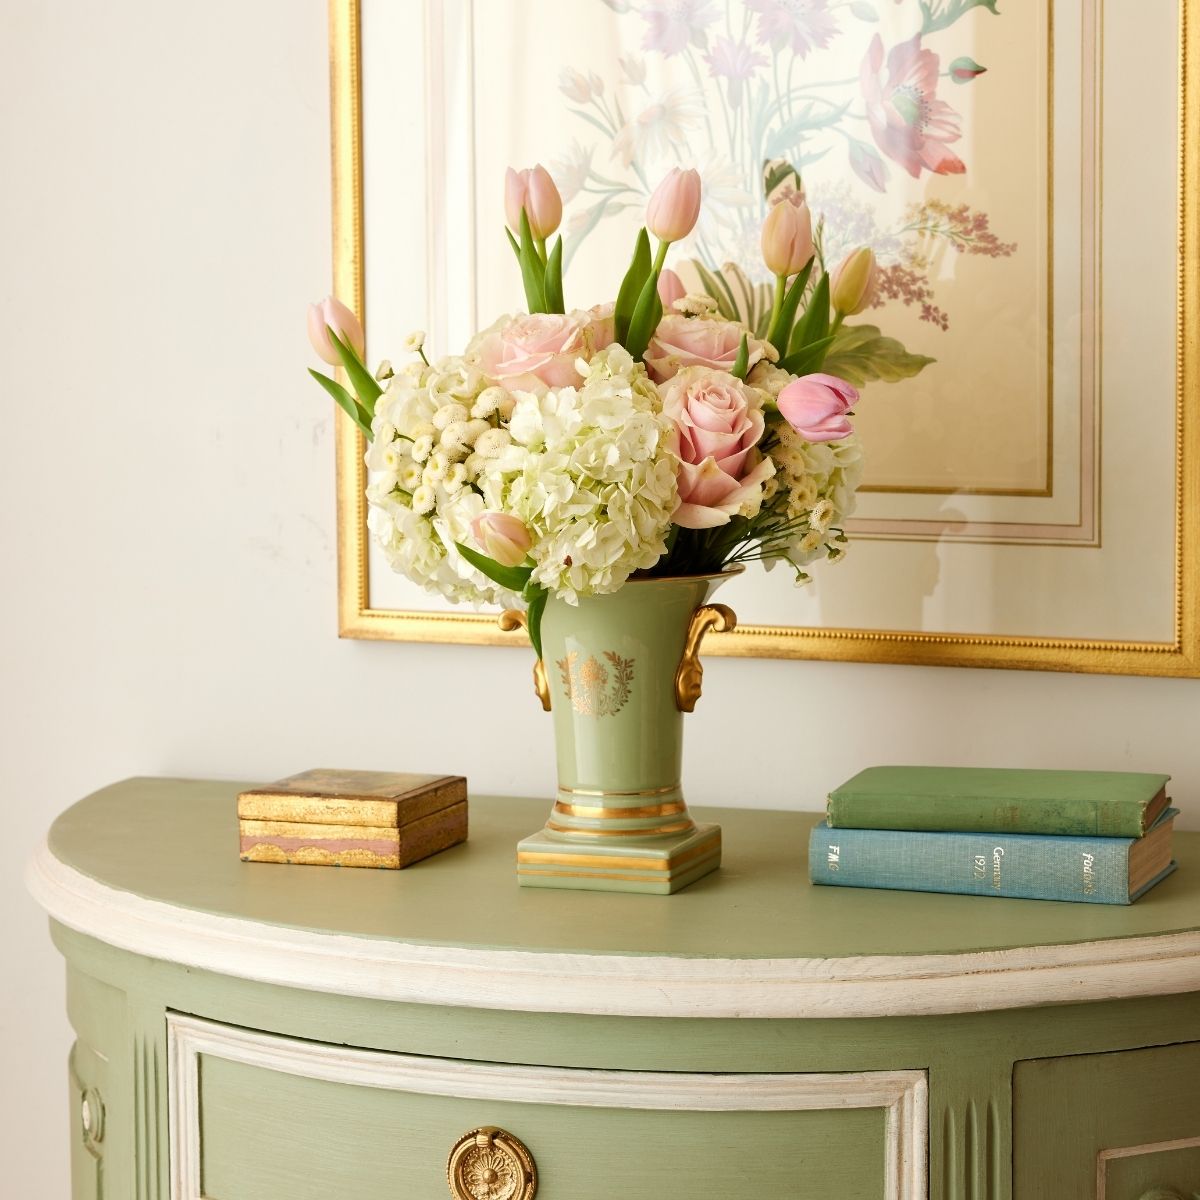 Art Deco Celadon & Gilt Vase - Caitlin Wilson Design